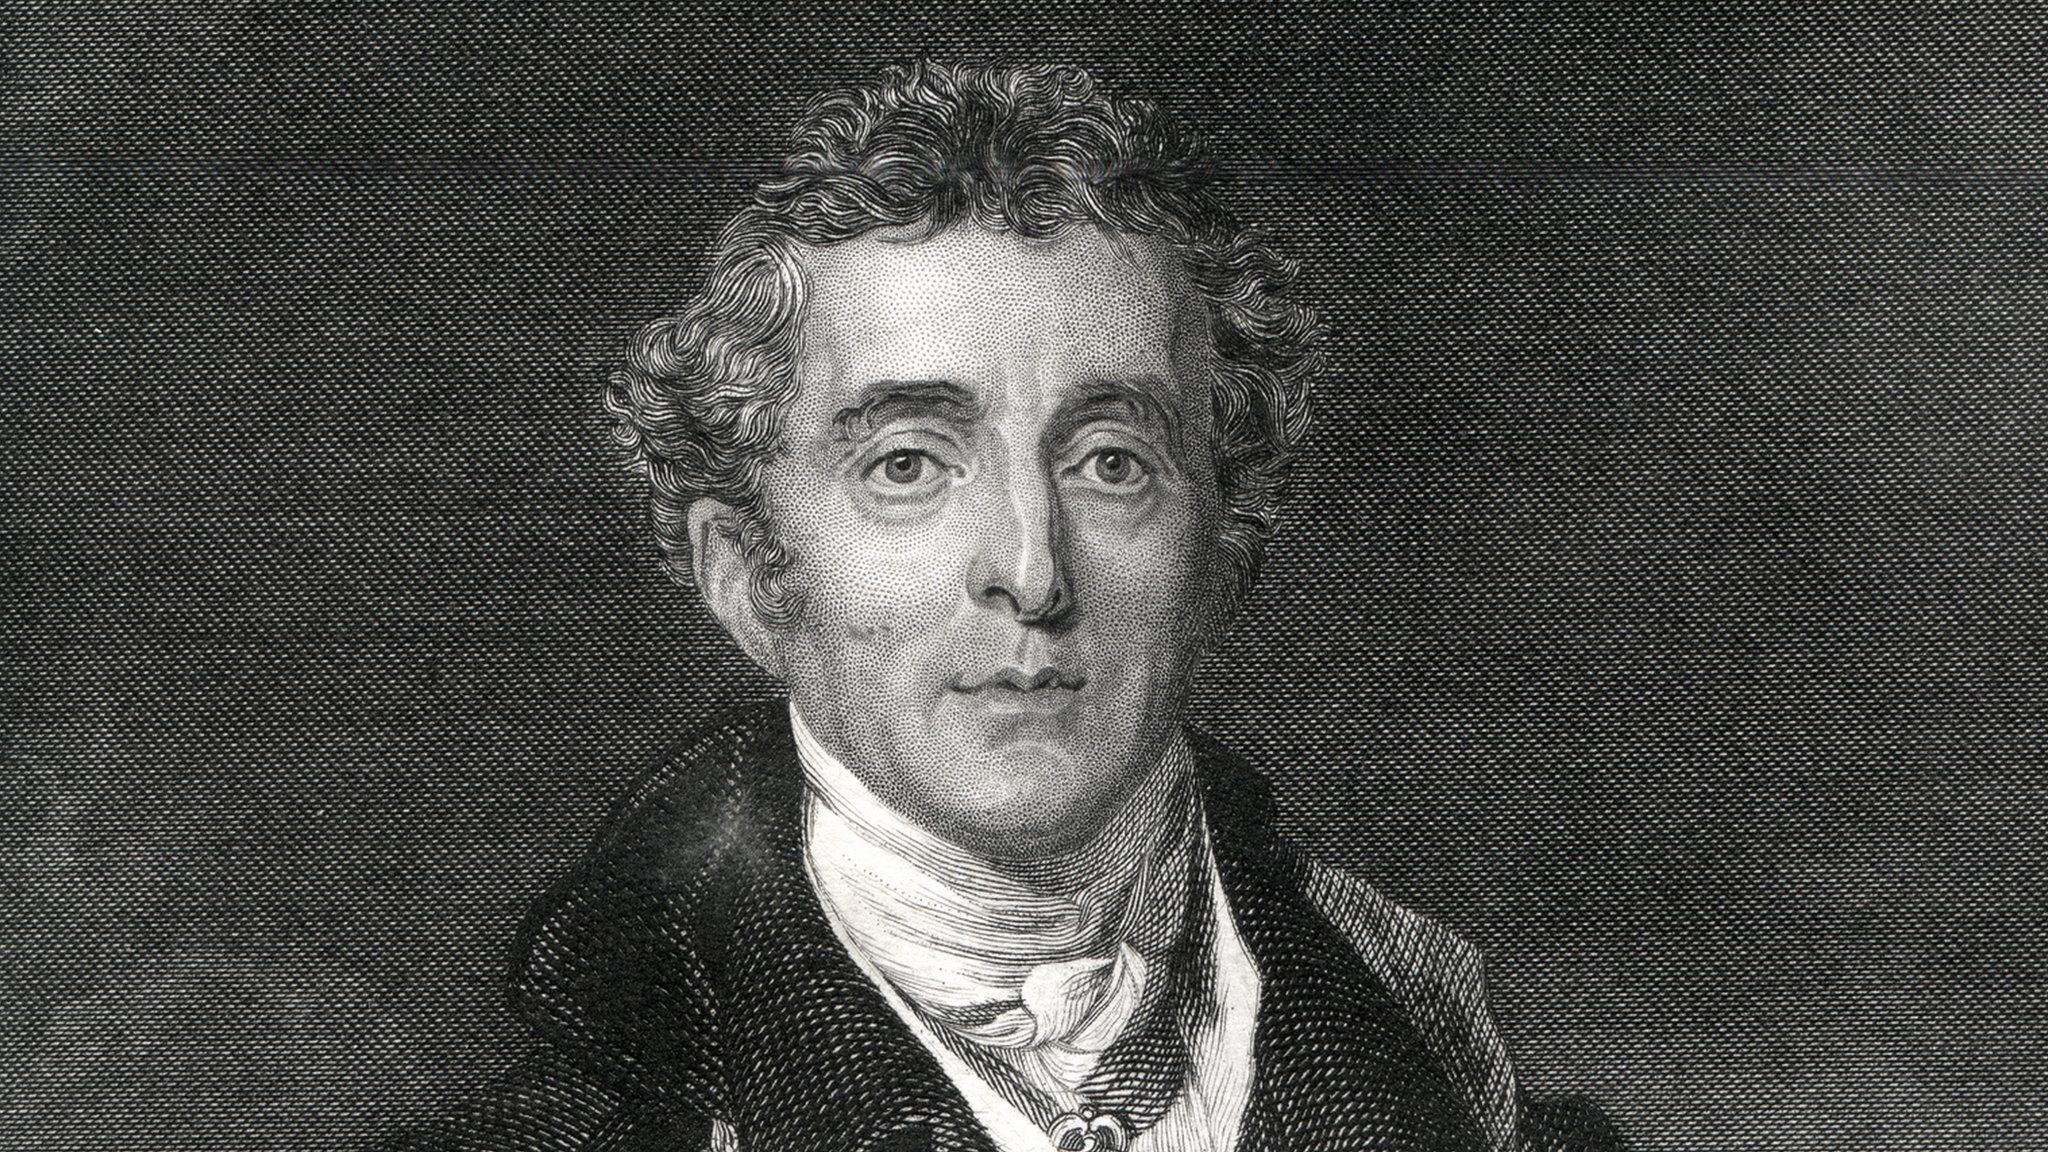 A portrait of the Duke of Wellington